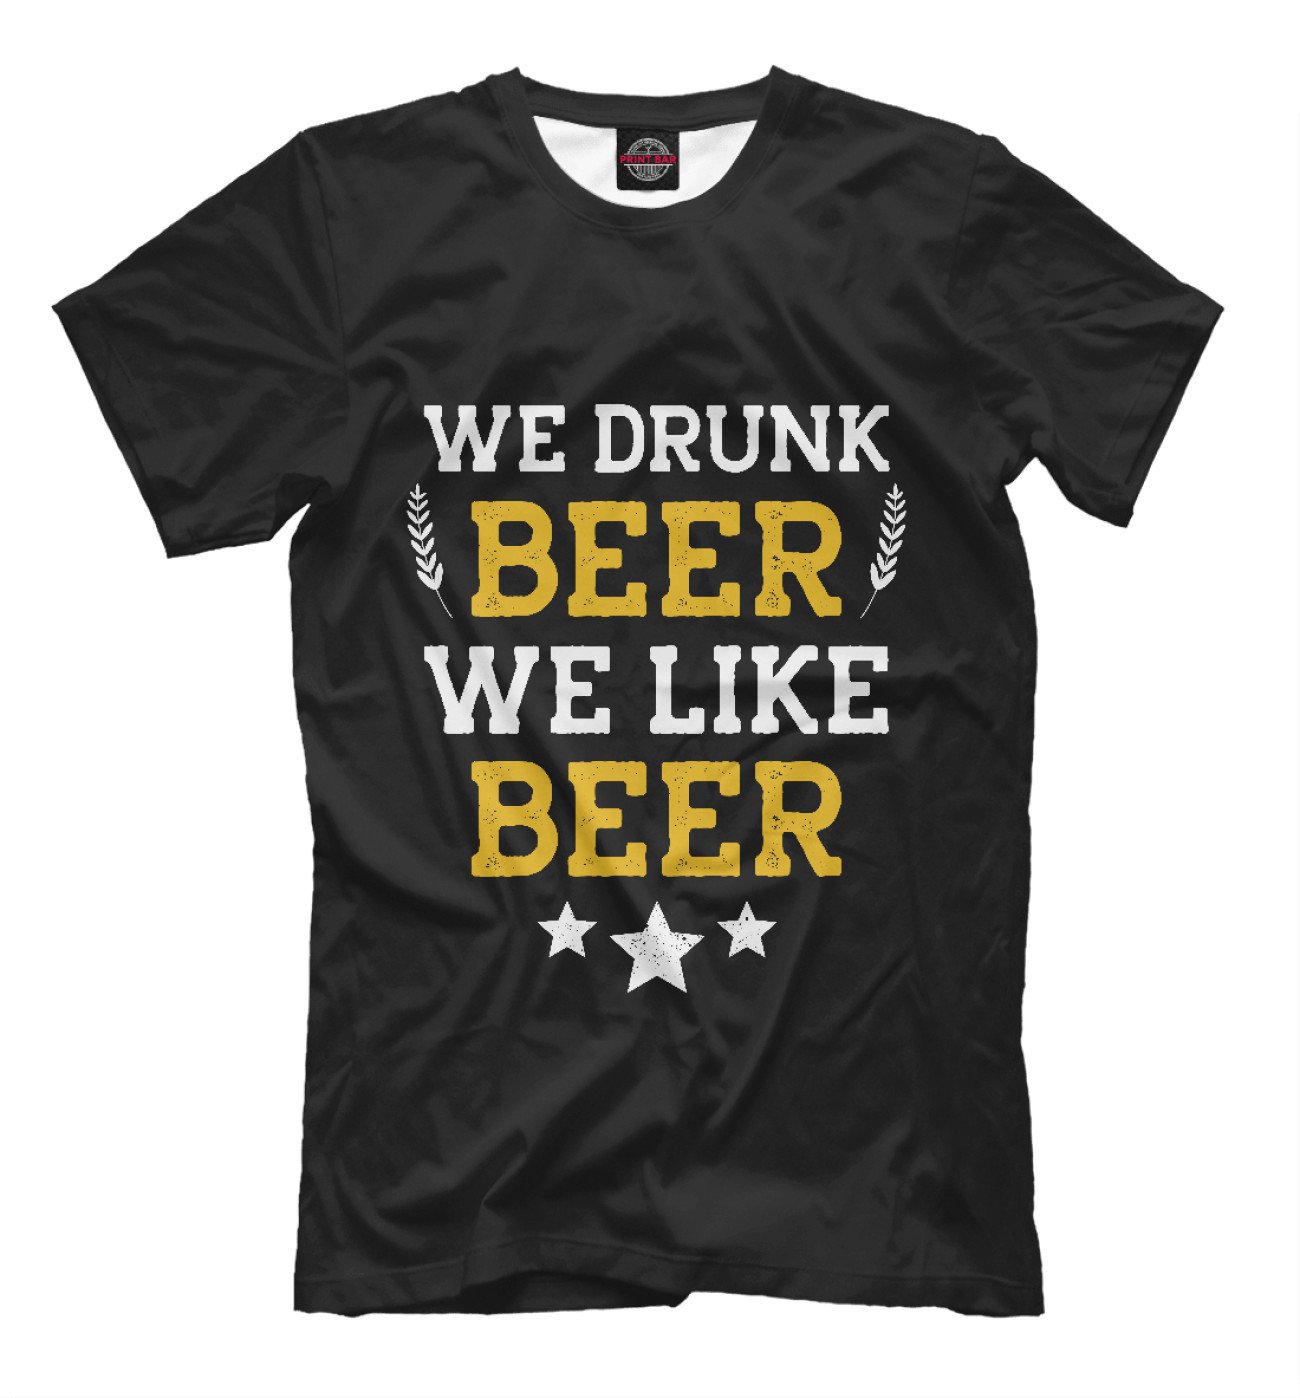 Мужская Футболка We drunk beer we like beer, артикул: PIV-306034-fut-2